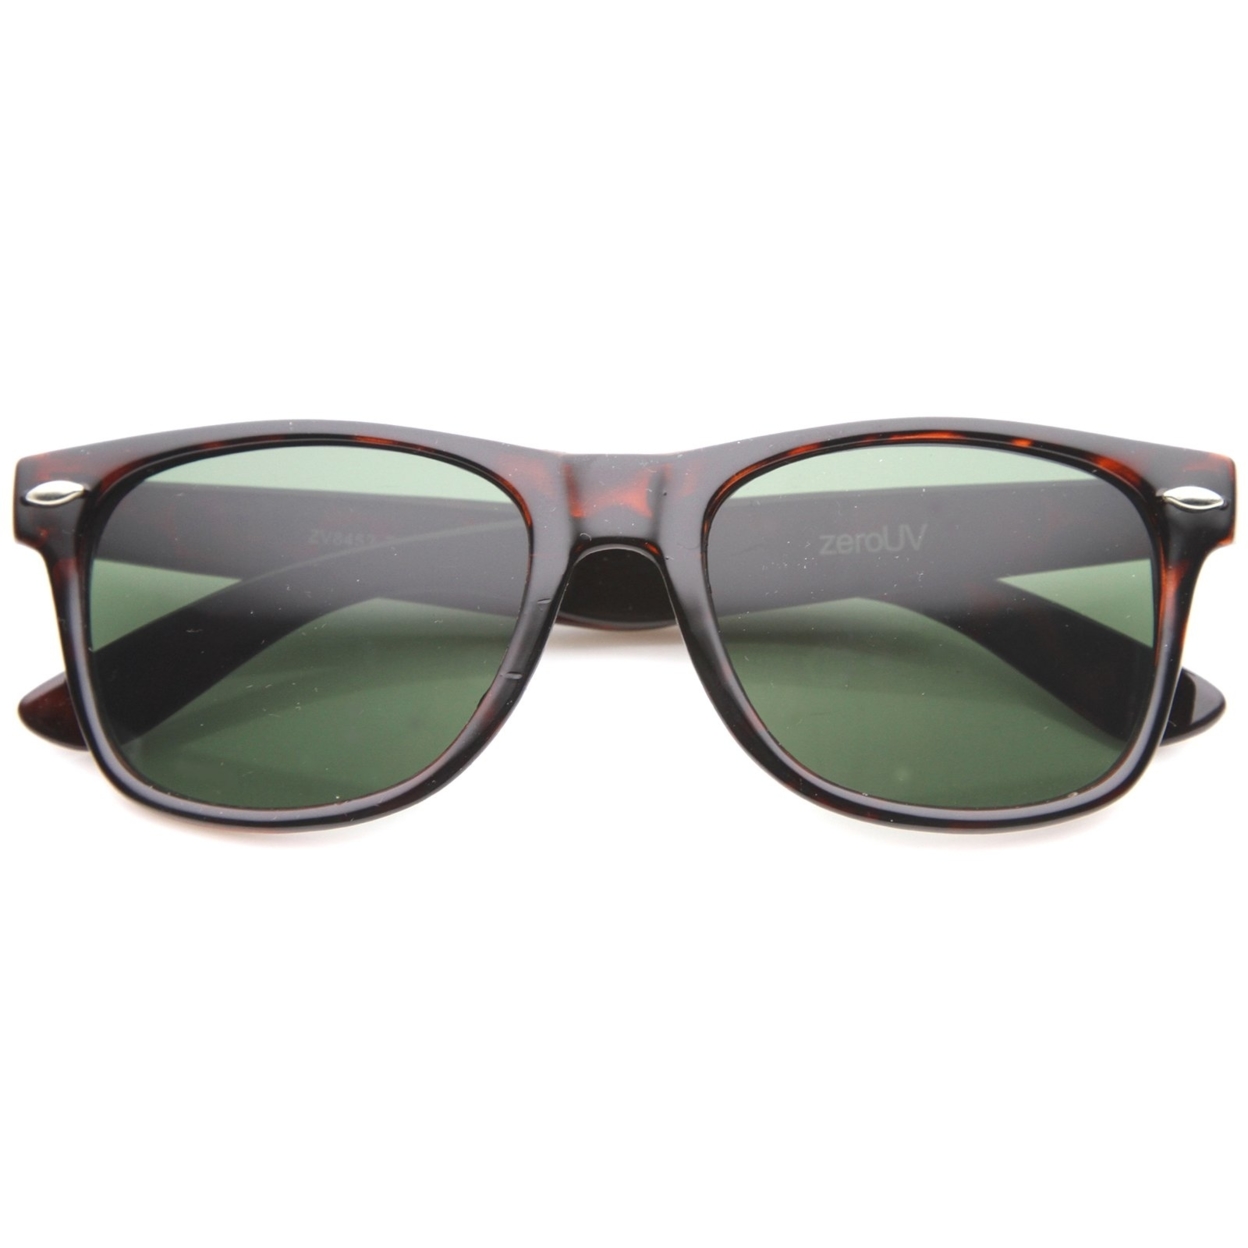 Classic Eyewear Iconic 80's Retro Large Horn Rimmed Sunglasses 54mm - Black / Green